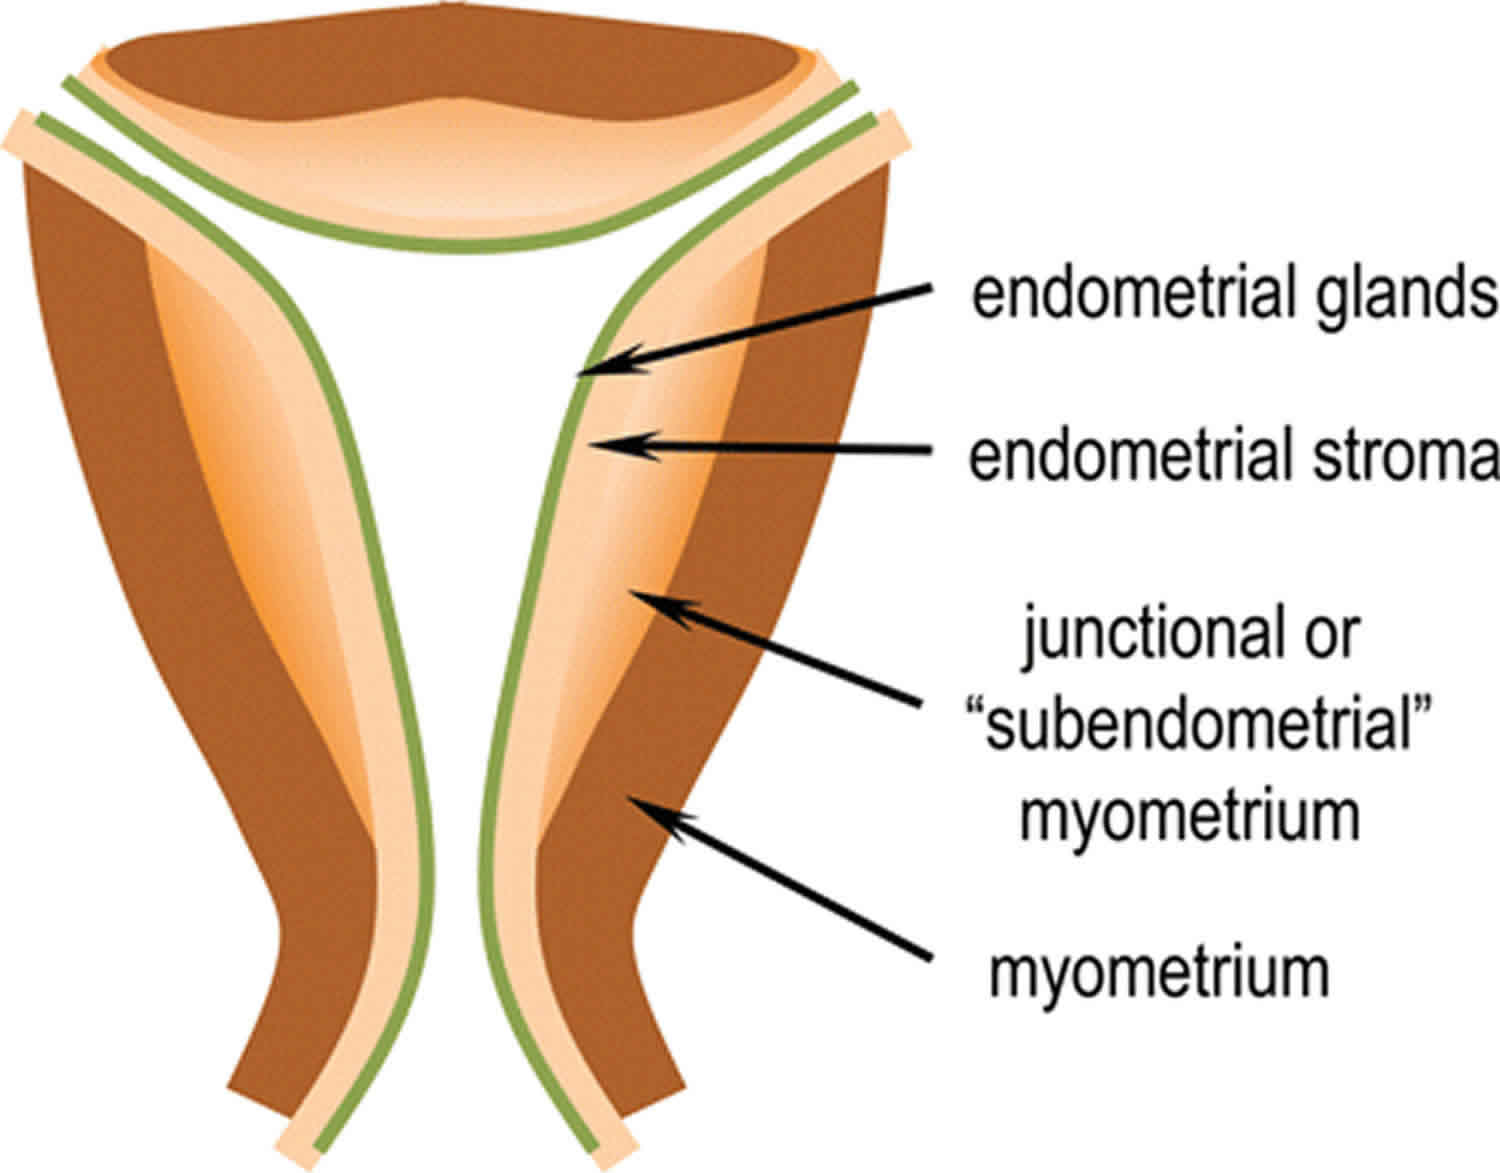 Uterine myometrium